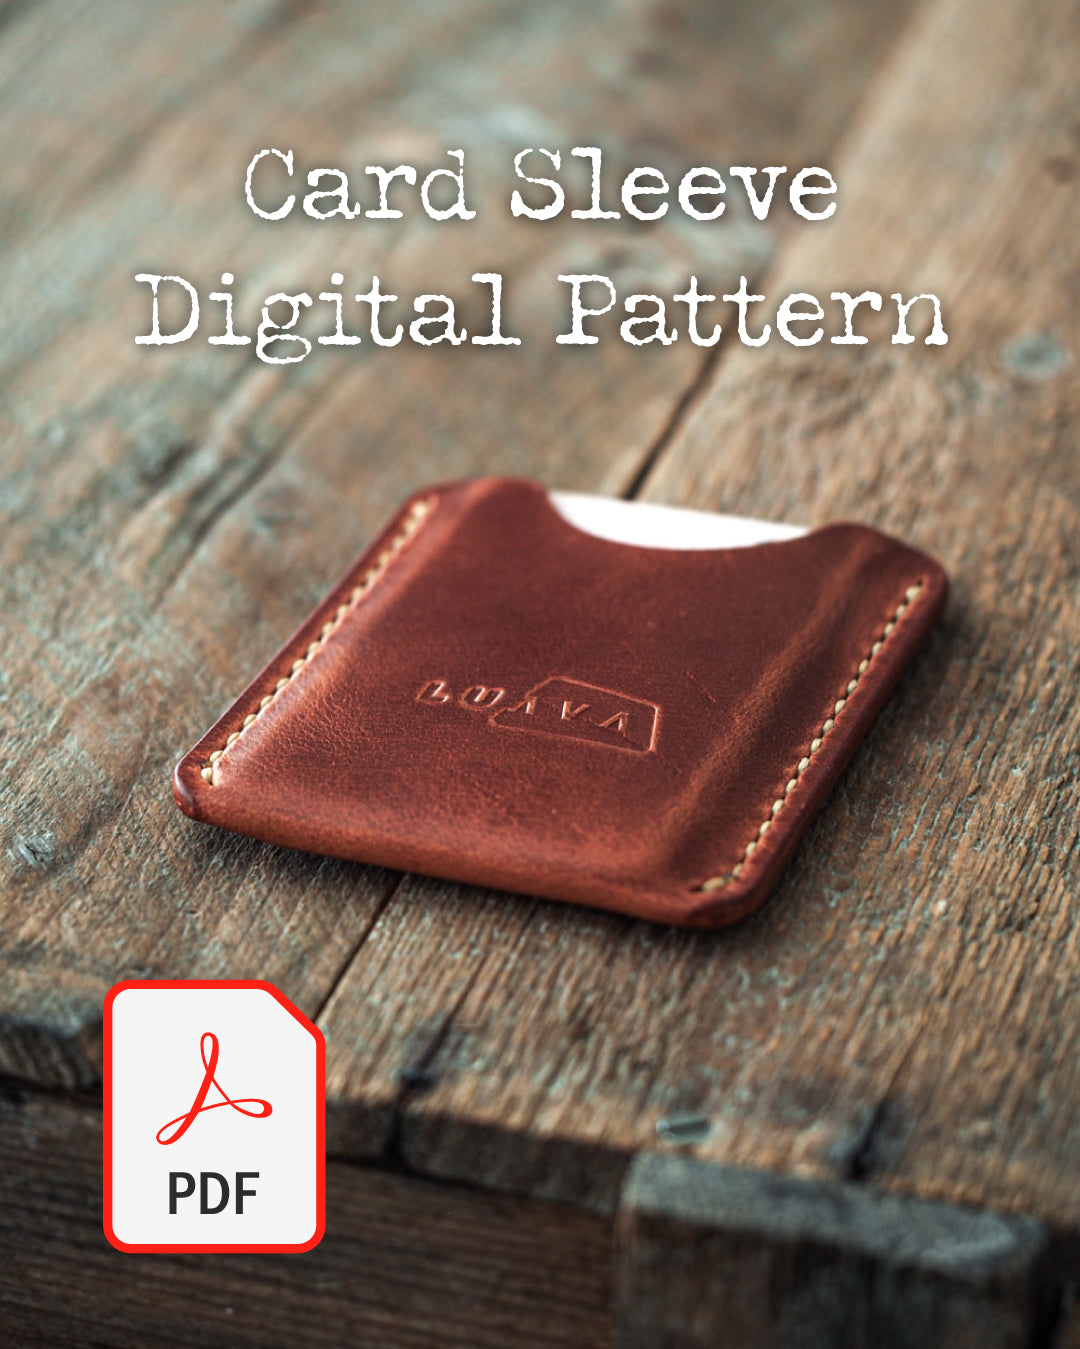 Digital wallet pattern by Luava - handmade leather card sleeve